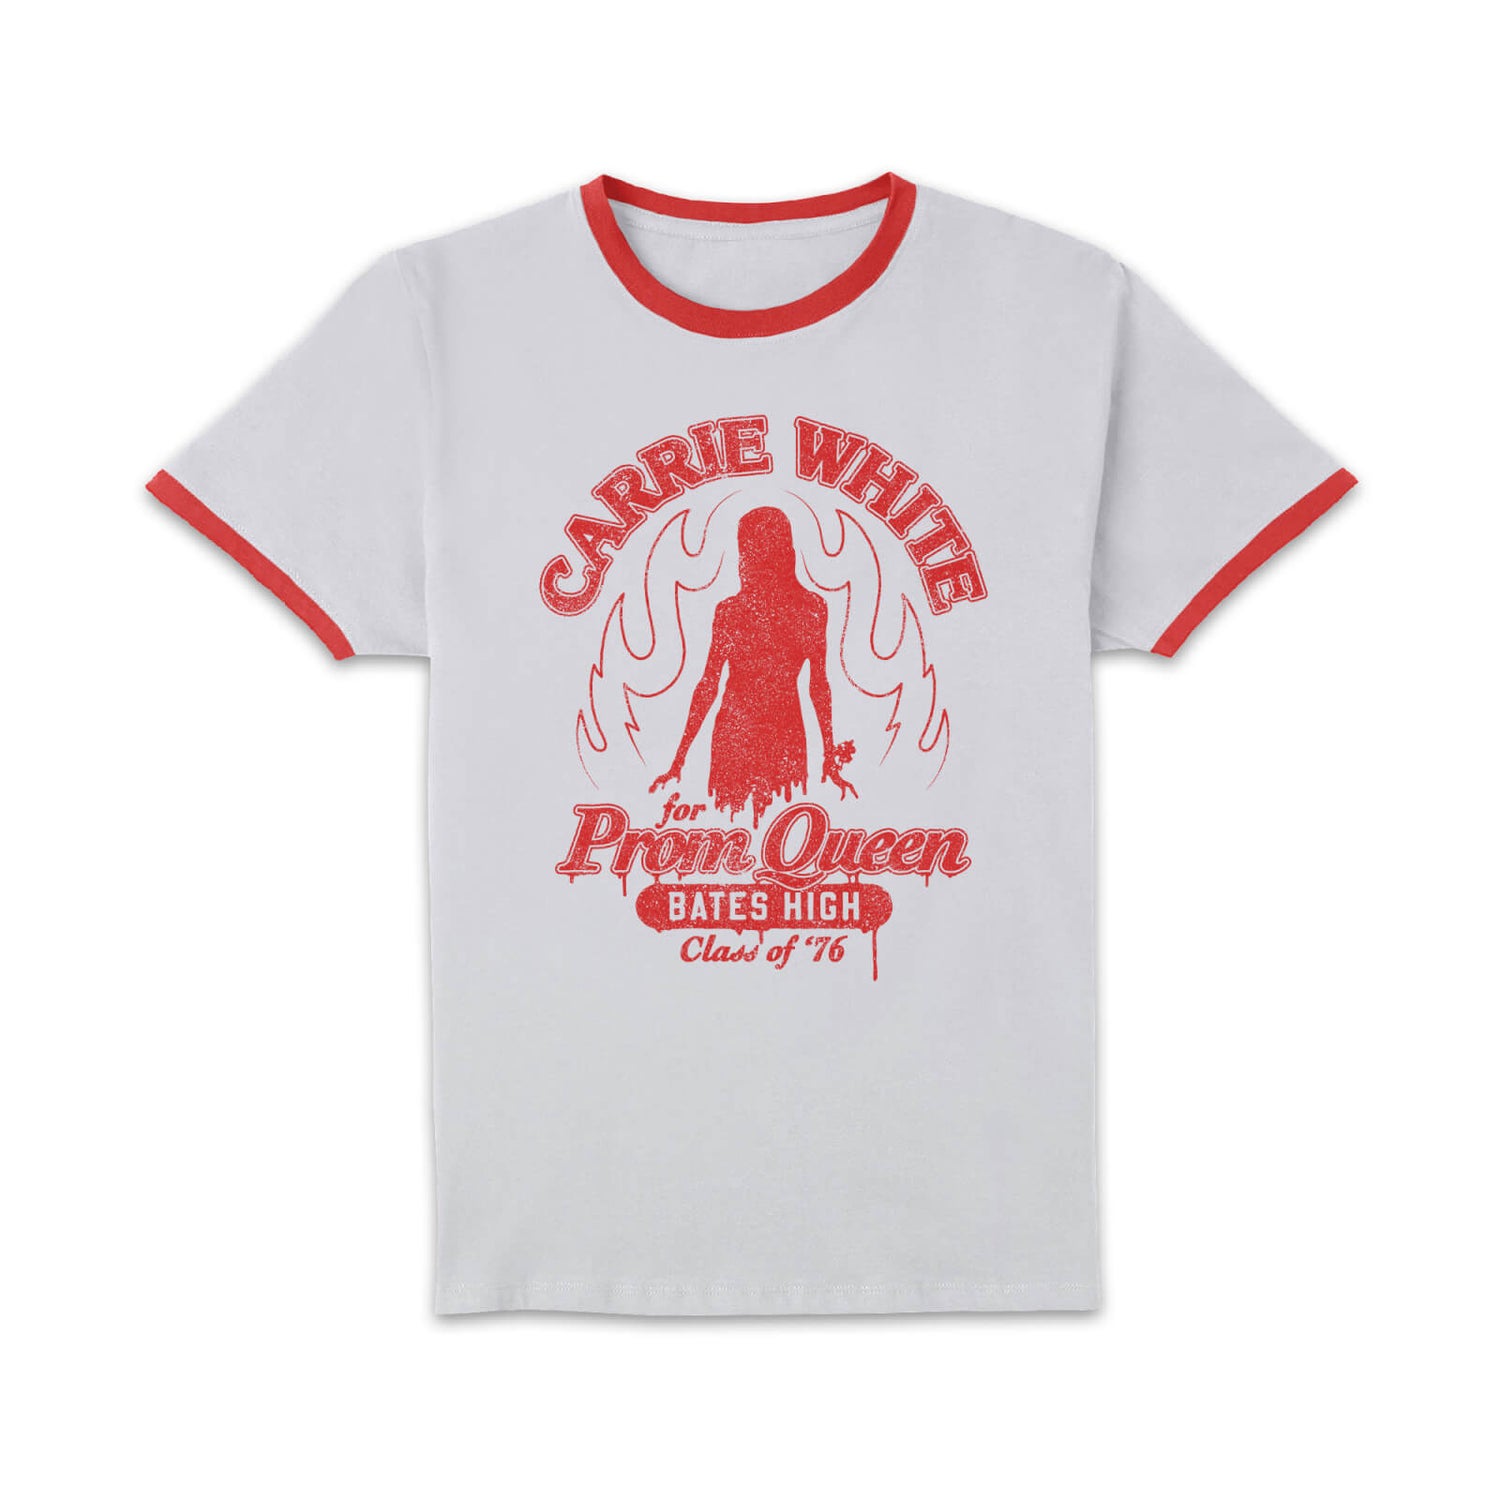 Carrie Carrie White For Prom Queen Unisex Ringer T-Shirt - White/Red